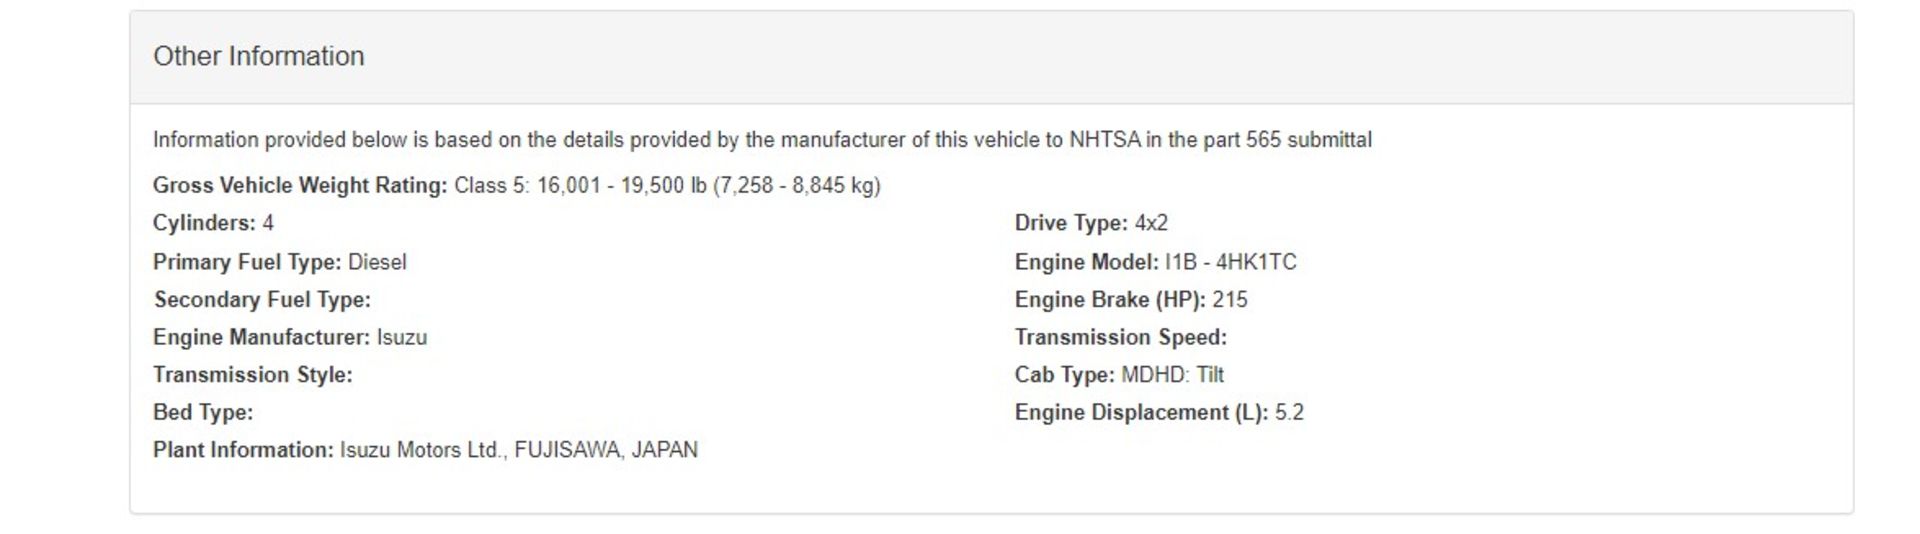 2017 ISUZU NRRNU4 20' Box, Straight truck, 4 Cyl, Diesel, Auto, 85000km, 2147hrs, Carfax - Image 7 of 17